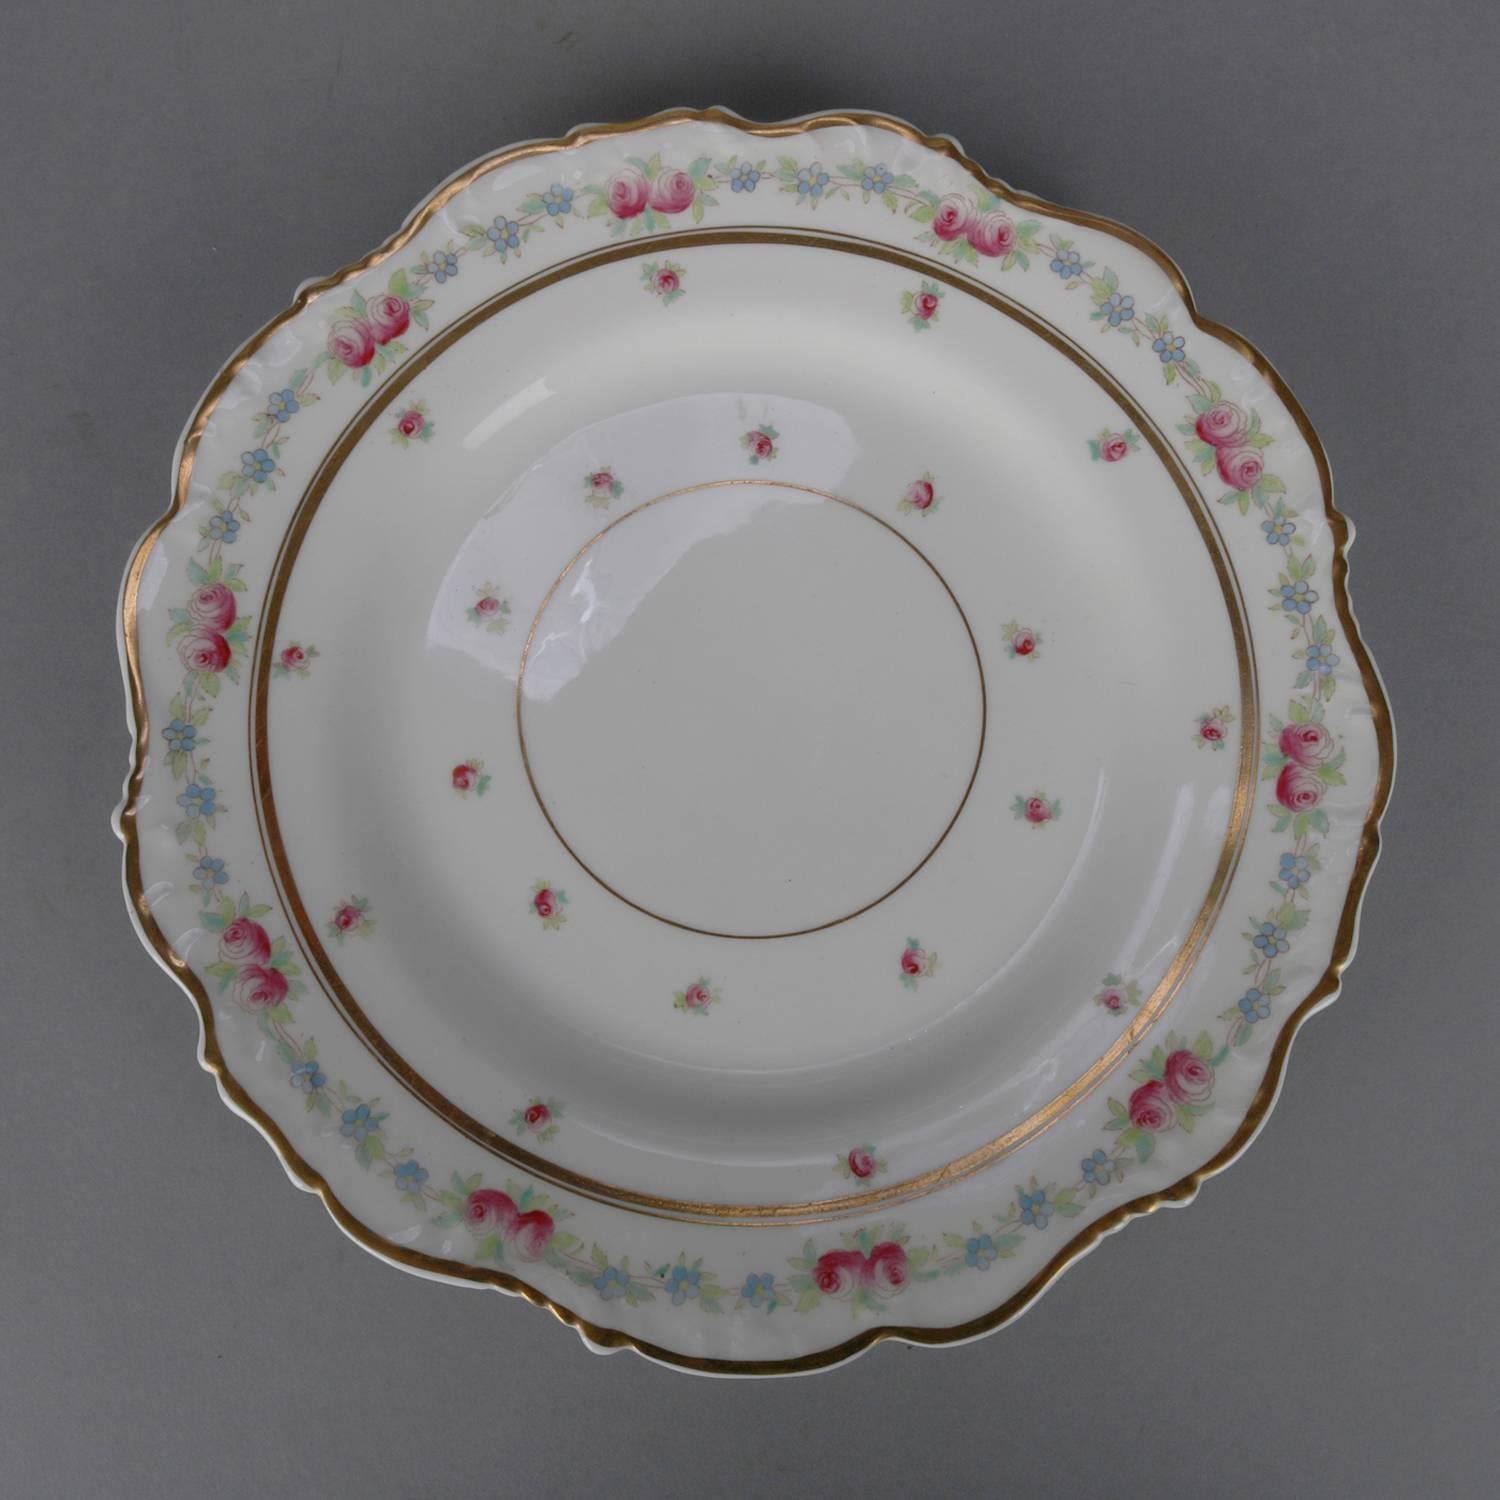 11 Antique English Cauldon Hand-Painted Floral and Gilt Porcelain Plates 8